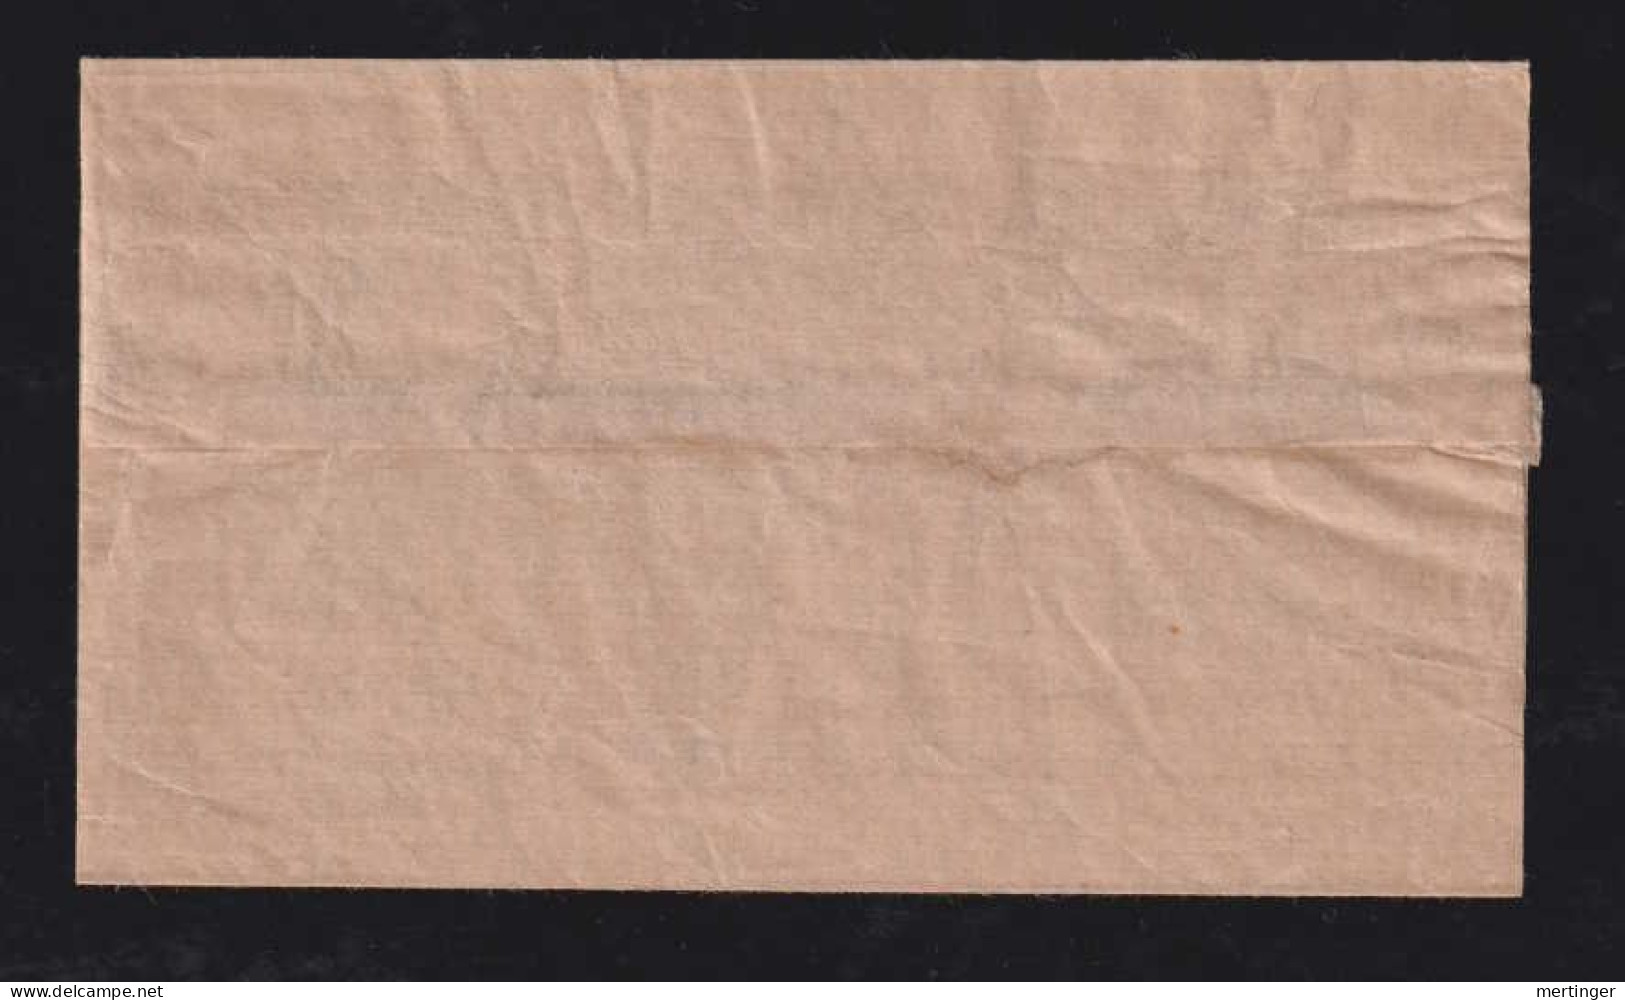 Australia 1916 Stationary Wrapper O.H.M.S. ½P KANGAROO ADELAIDE X FRANKLIN HARBOUR - Lettres & Documents